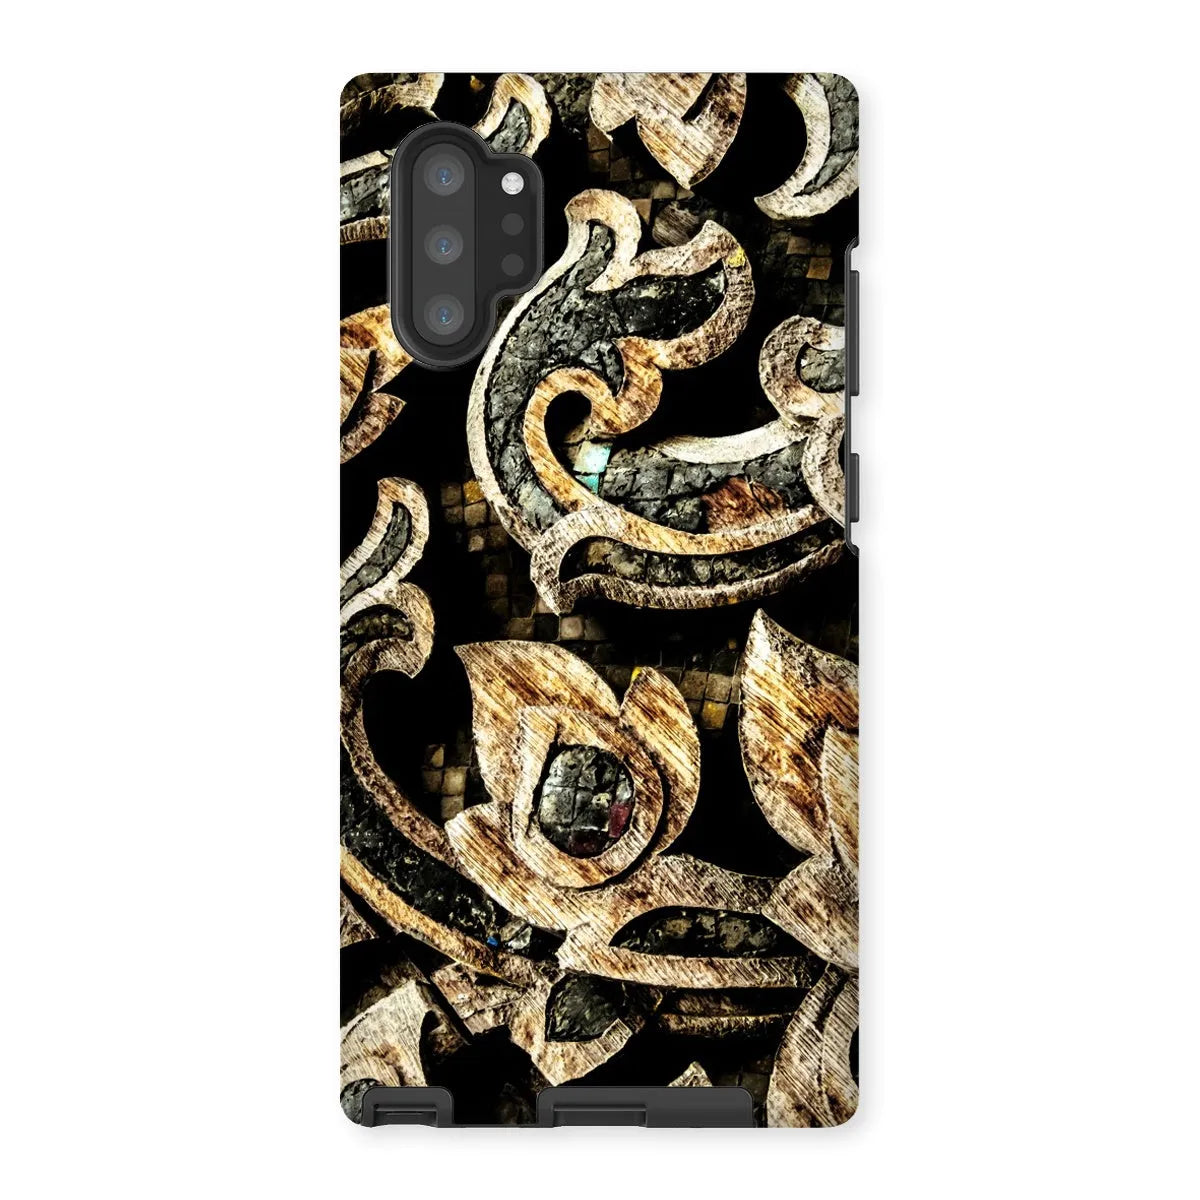 Against The Grain Tough Phone Case - Samsung Galaxy Note 10p / Matte - Mobile Phone Cases - Aesthetic Art